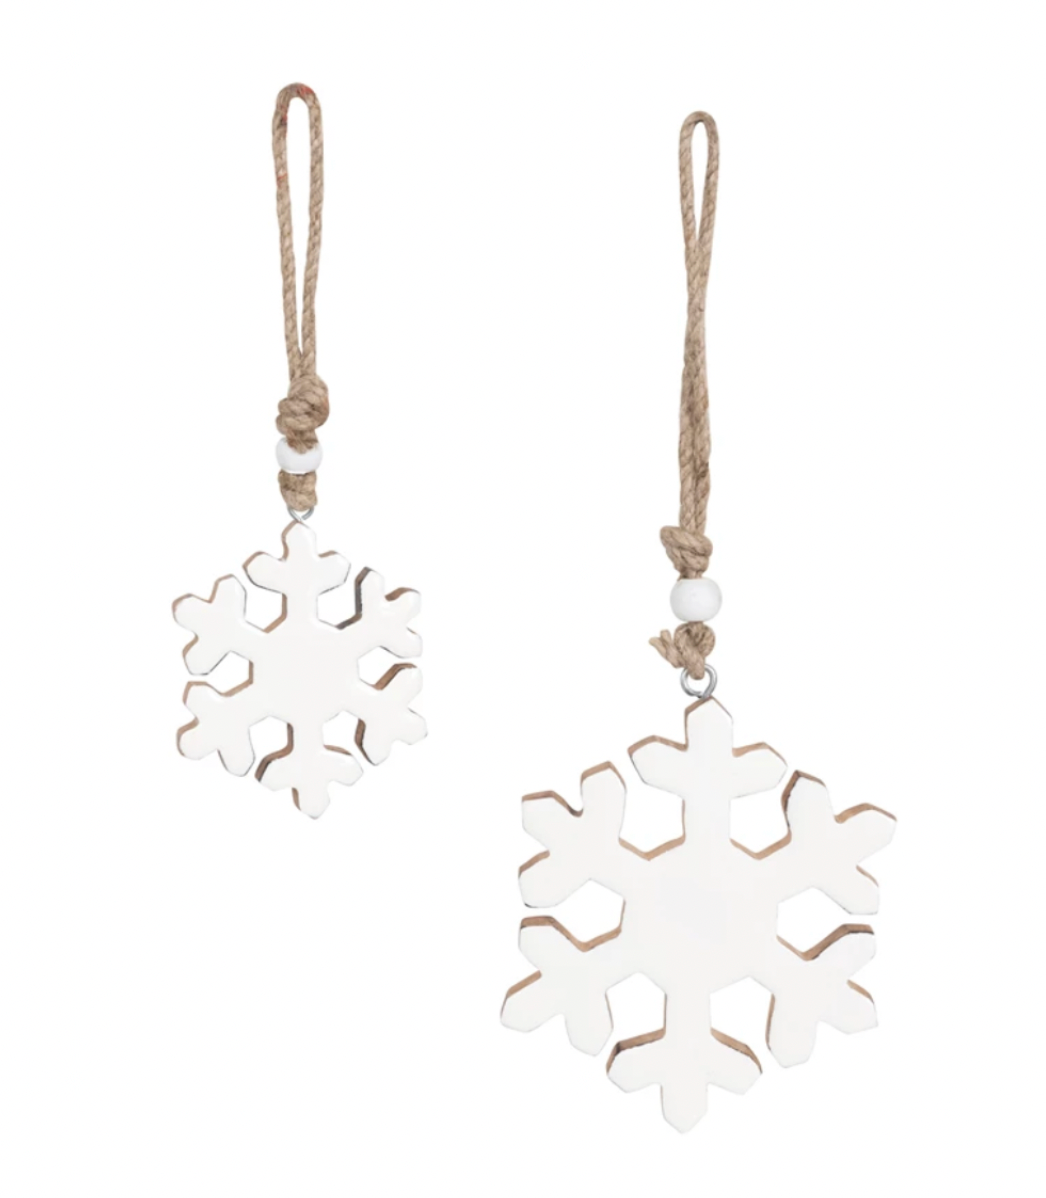 Enameled Mango Wood Snowflake Ornaments with Wood Beads